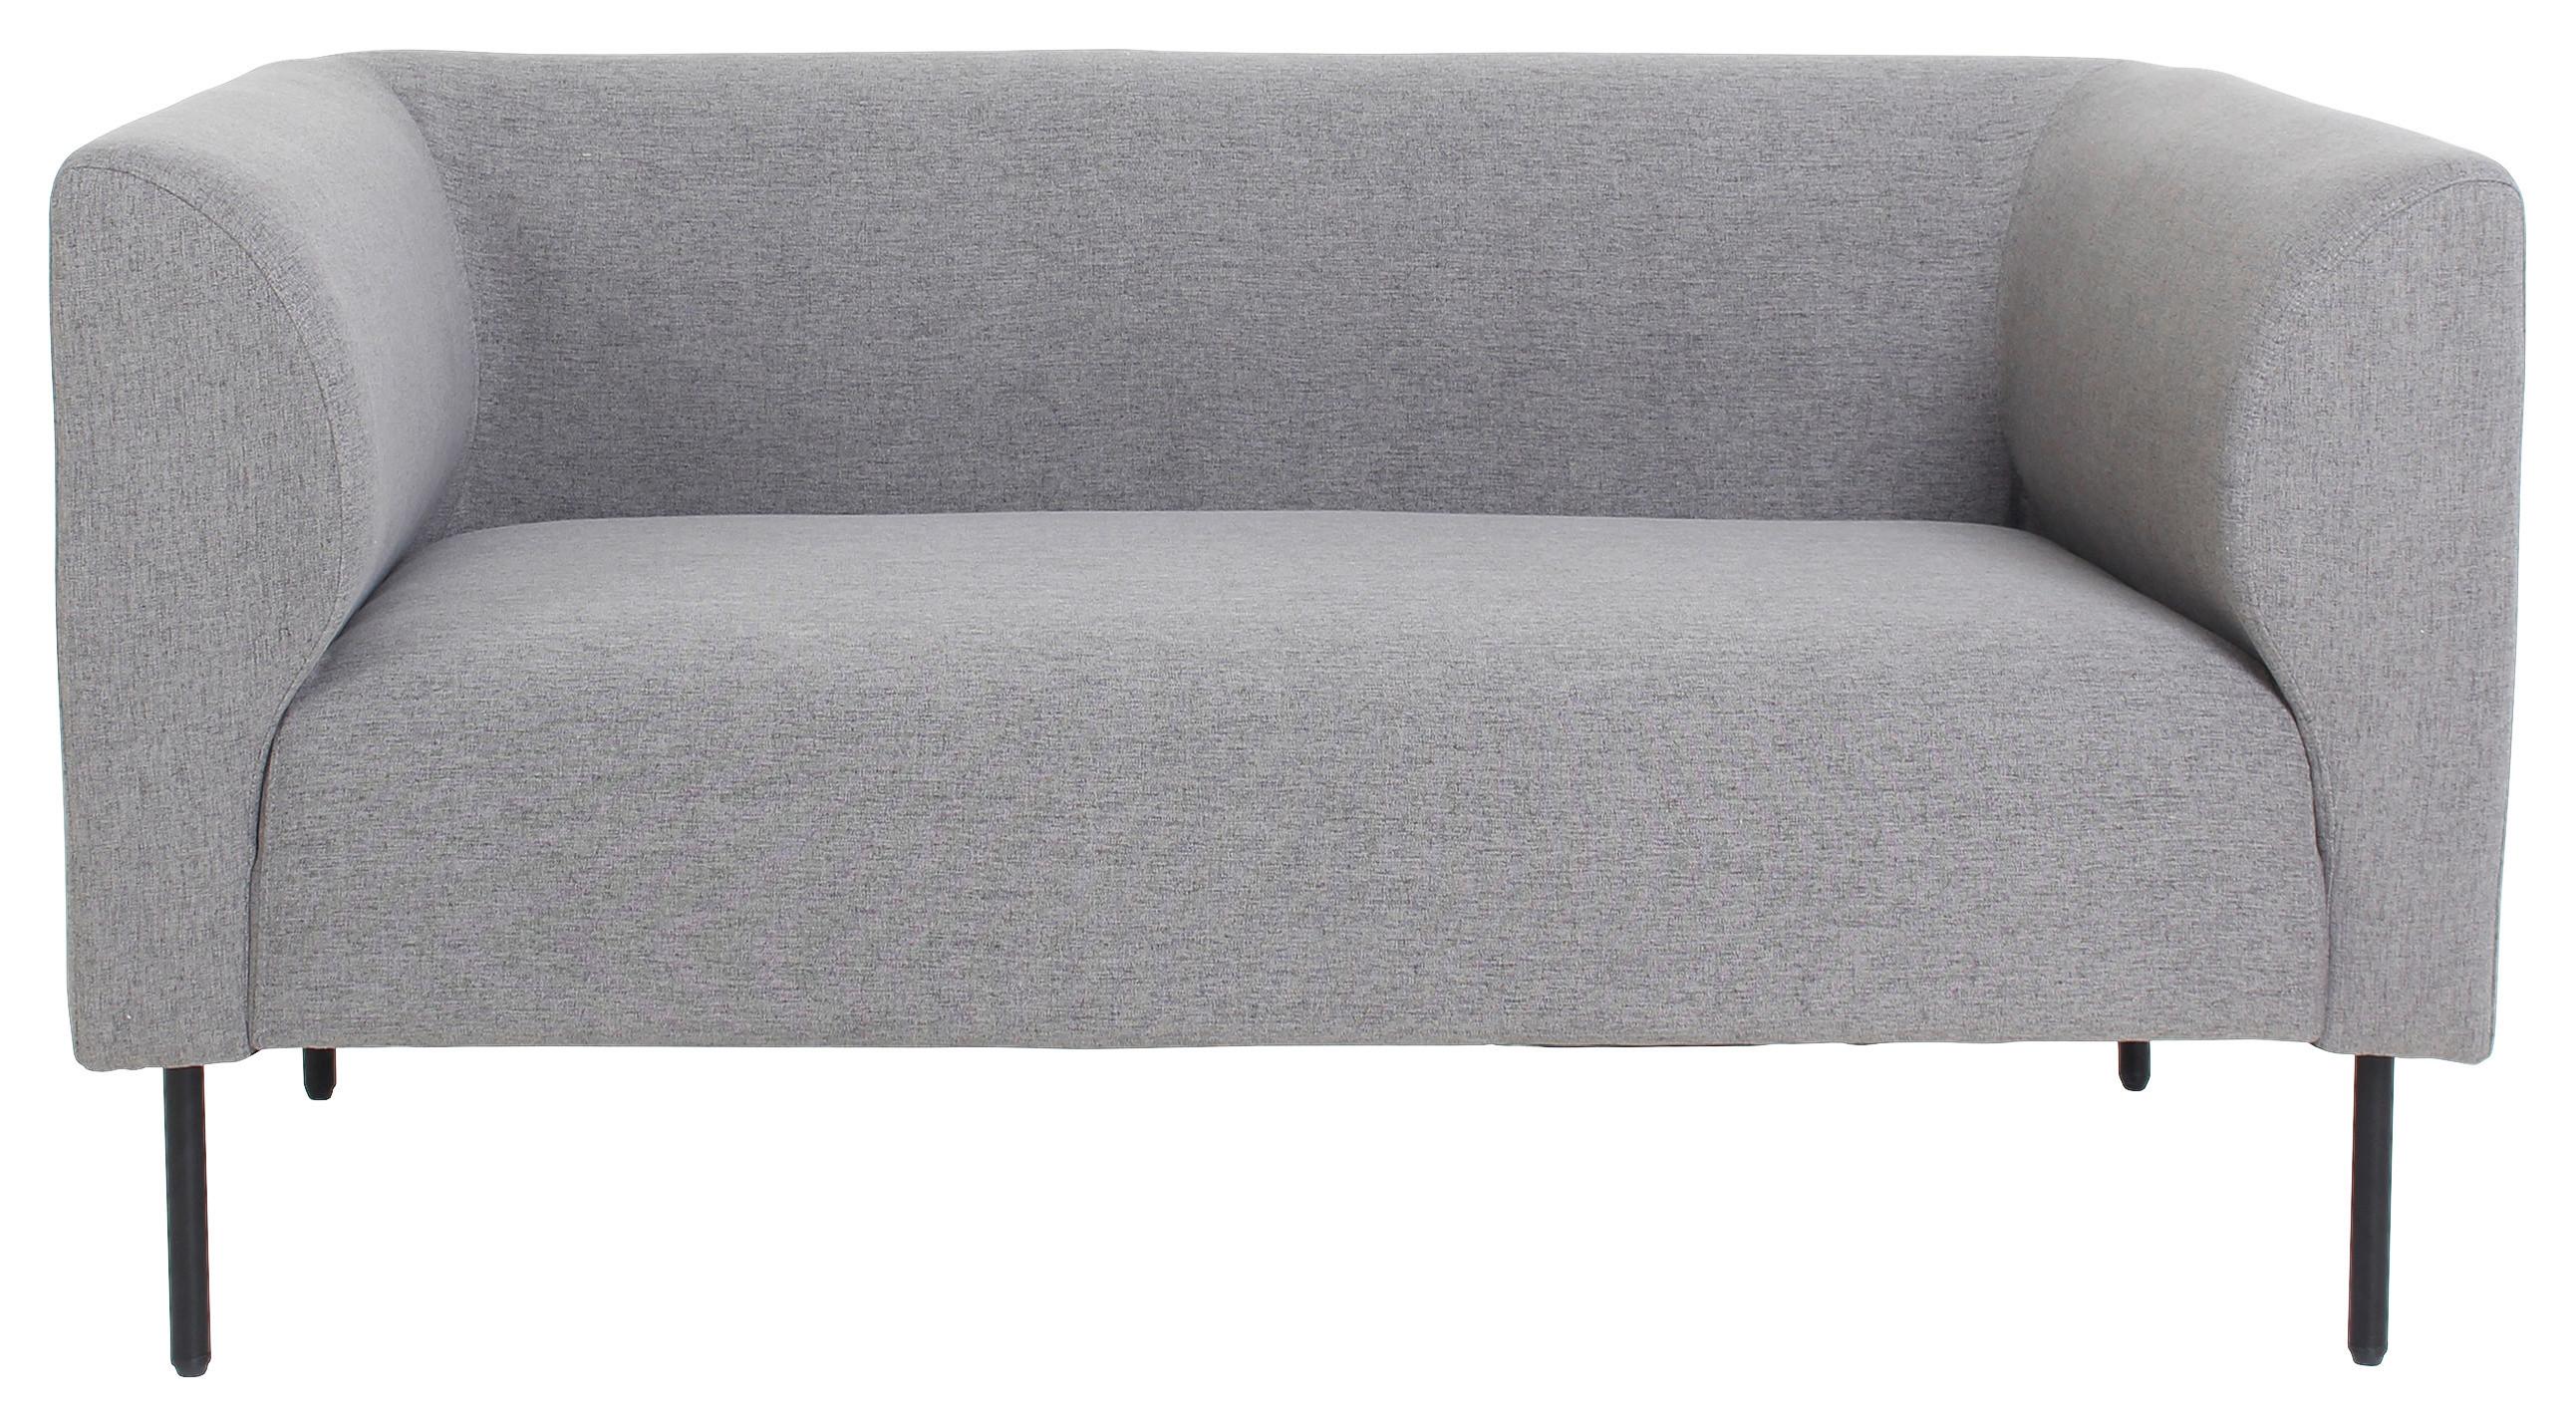 Zweisitzer-Sofa Kadri B: 146cm Grau,schwarz - Schwarz/Grau, MODERN, Textil/Metall (146/74/75cm) - MID.YOU